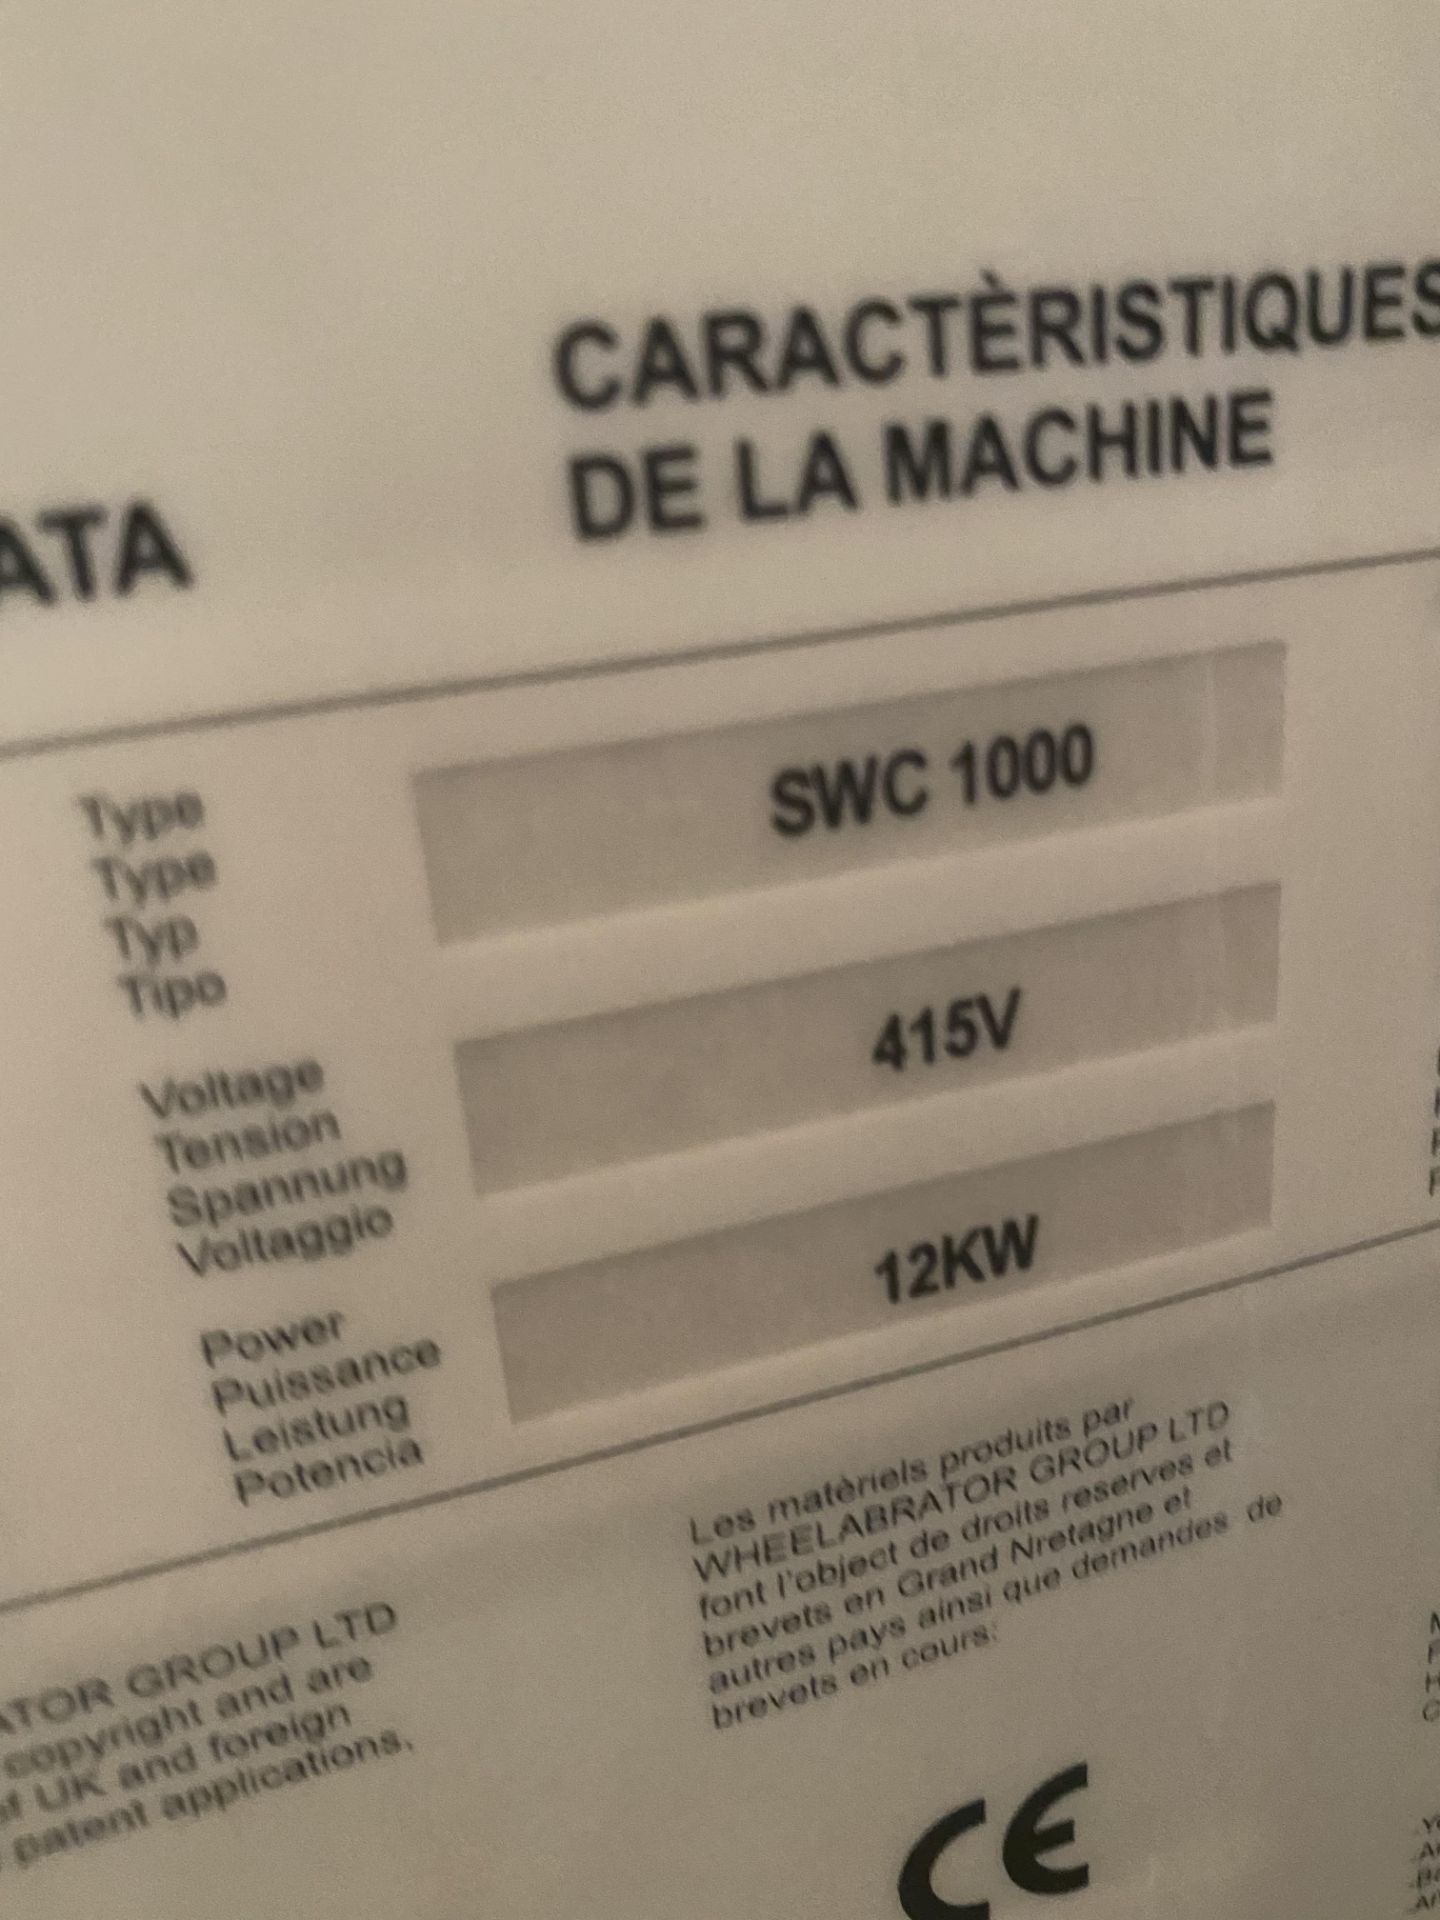 Wheelabrator SWC 1000 Wet Blast Cabinet, 415V, sta - Image 3 of 3